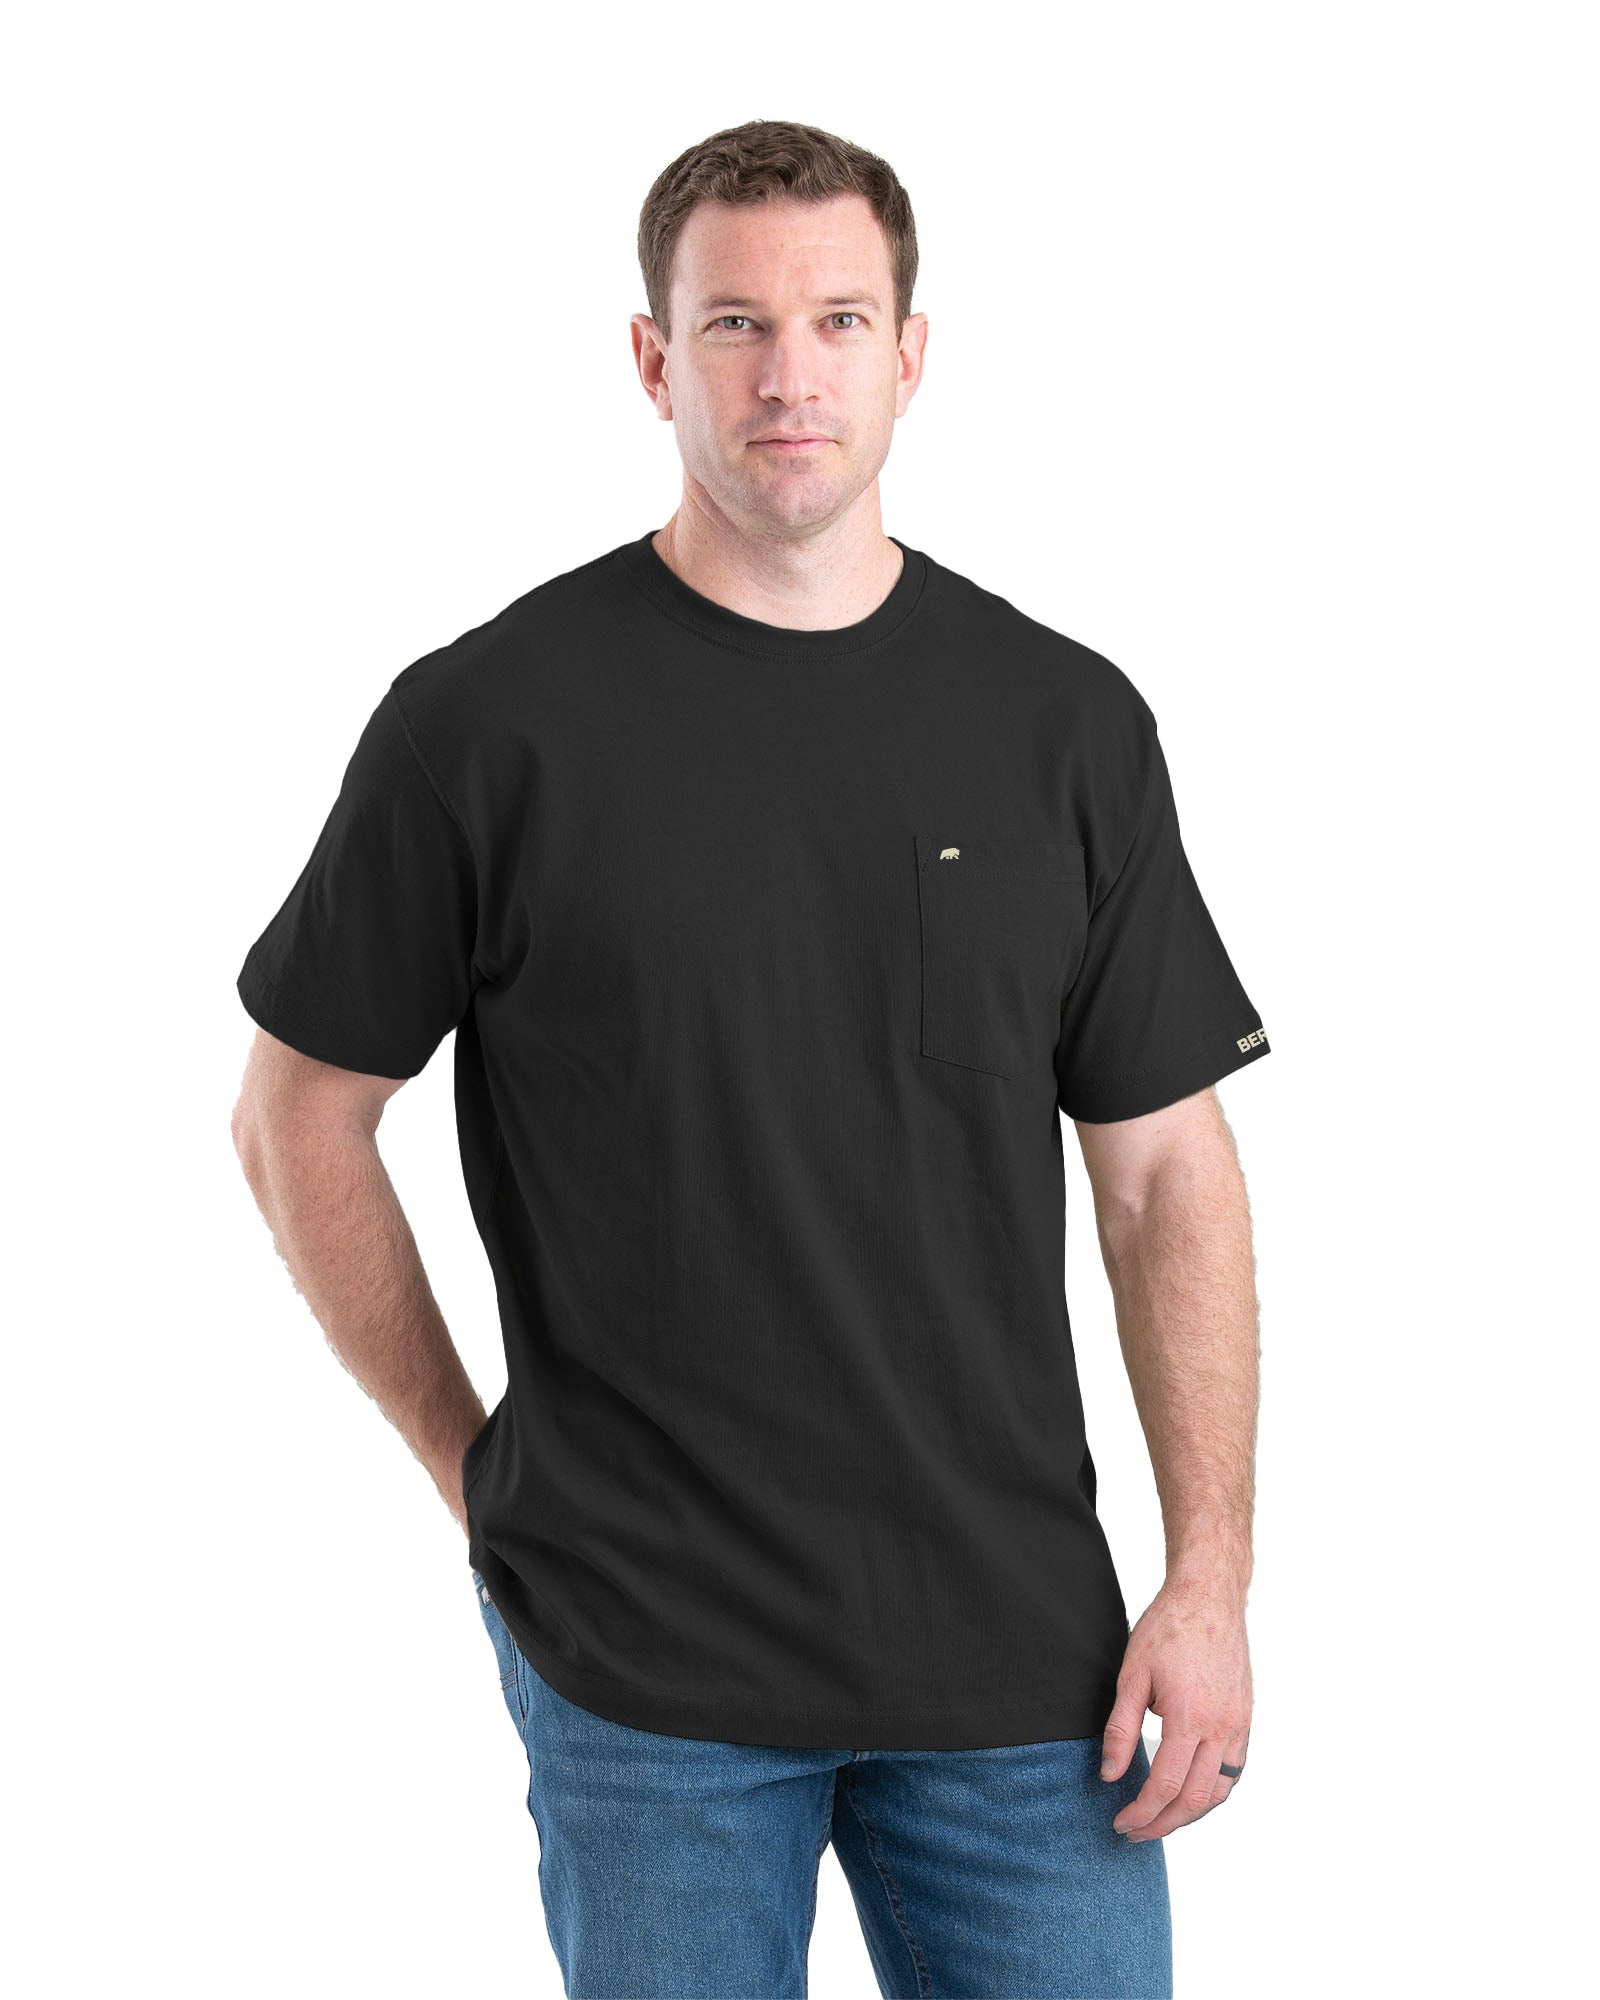 Heavyweight Short Sleeve Pocket T-Shirt